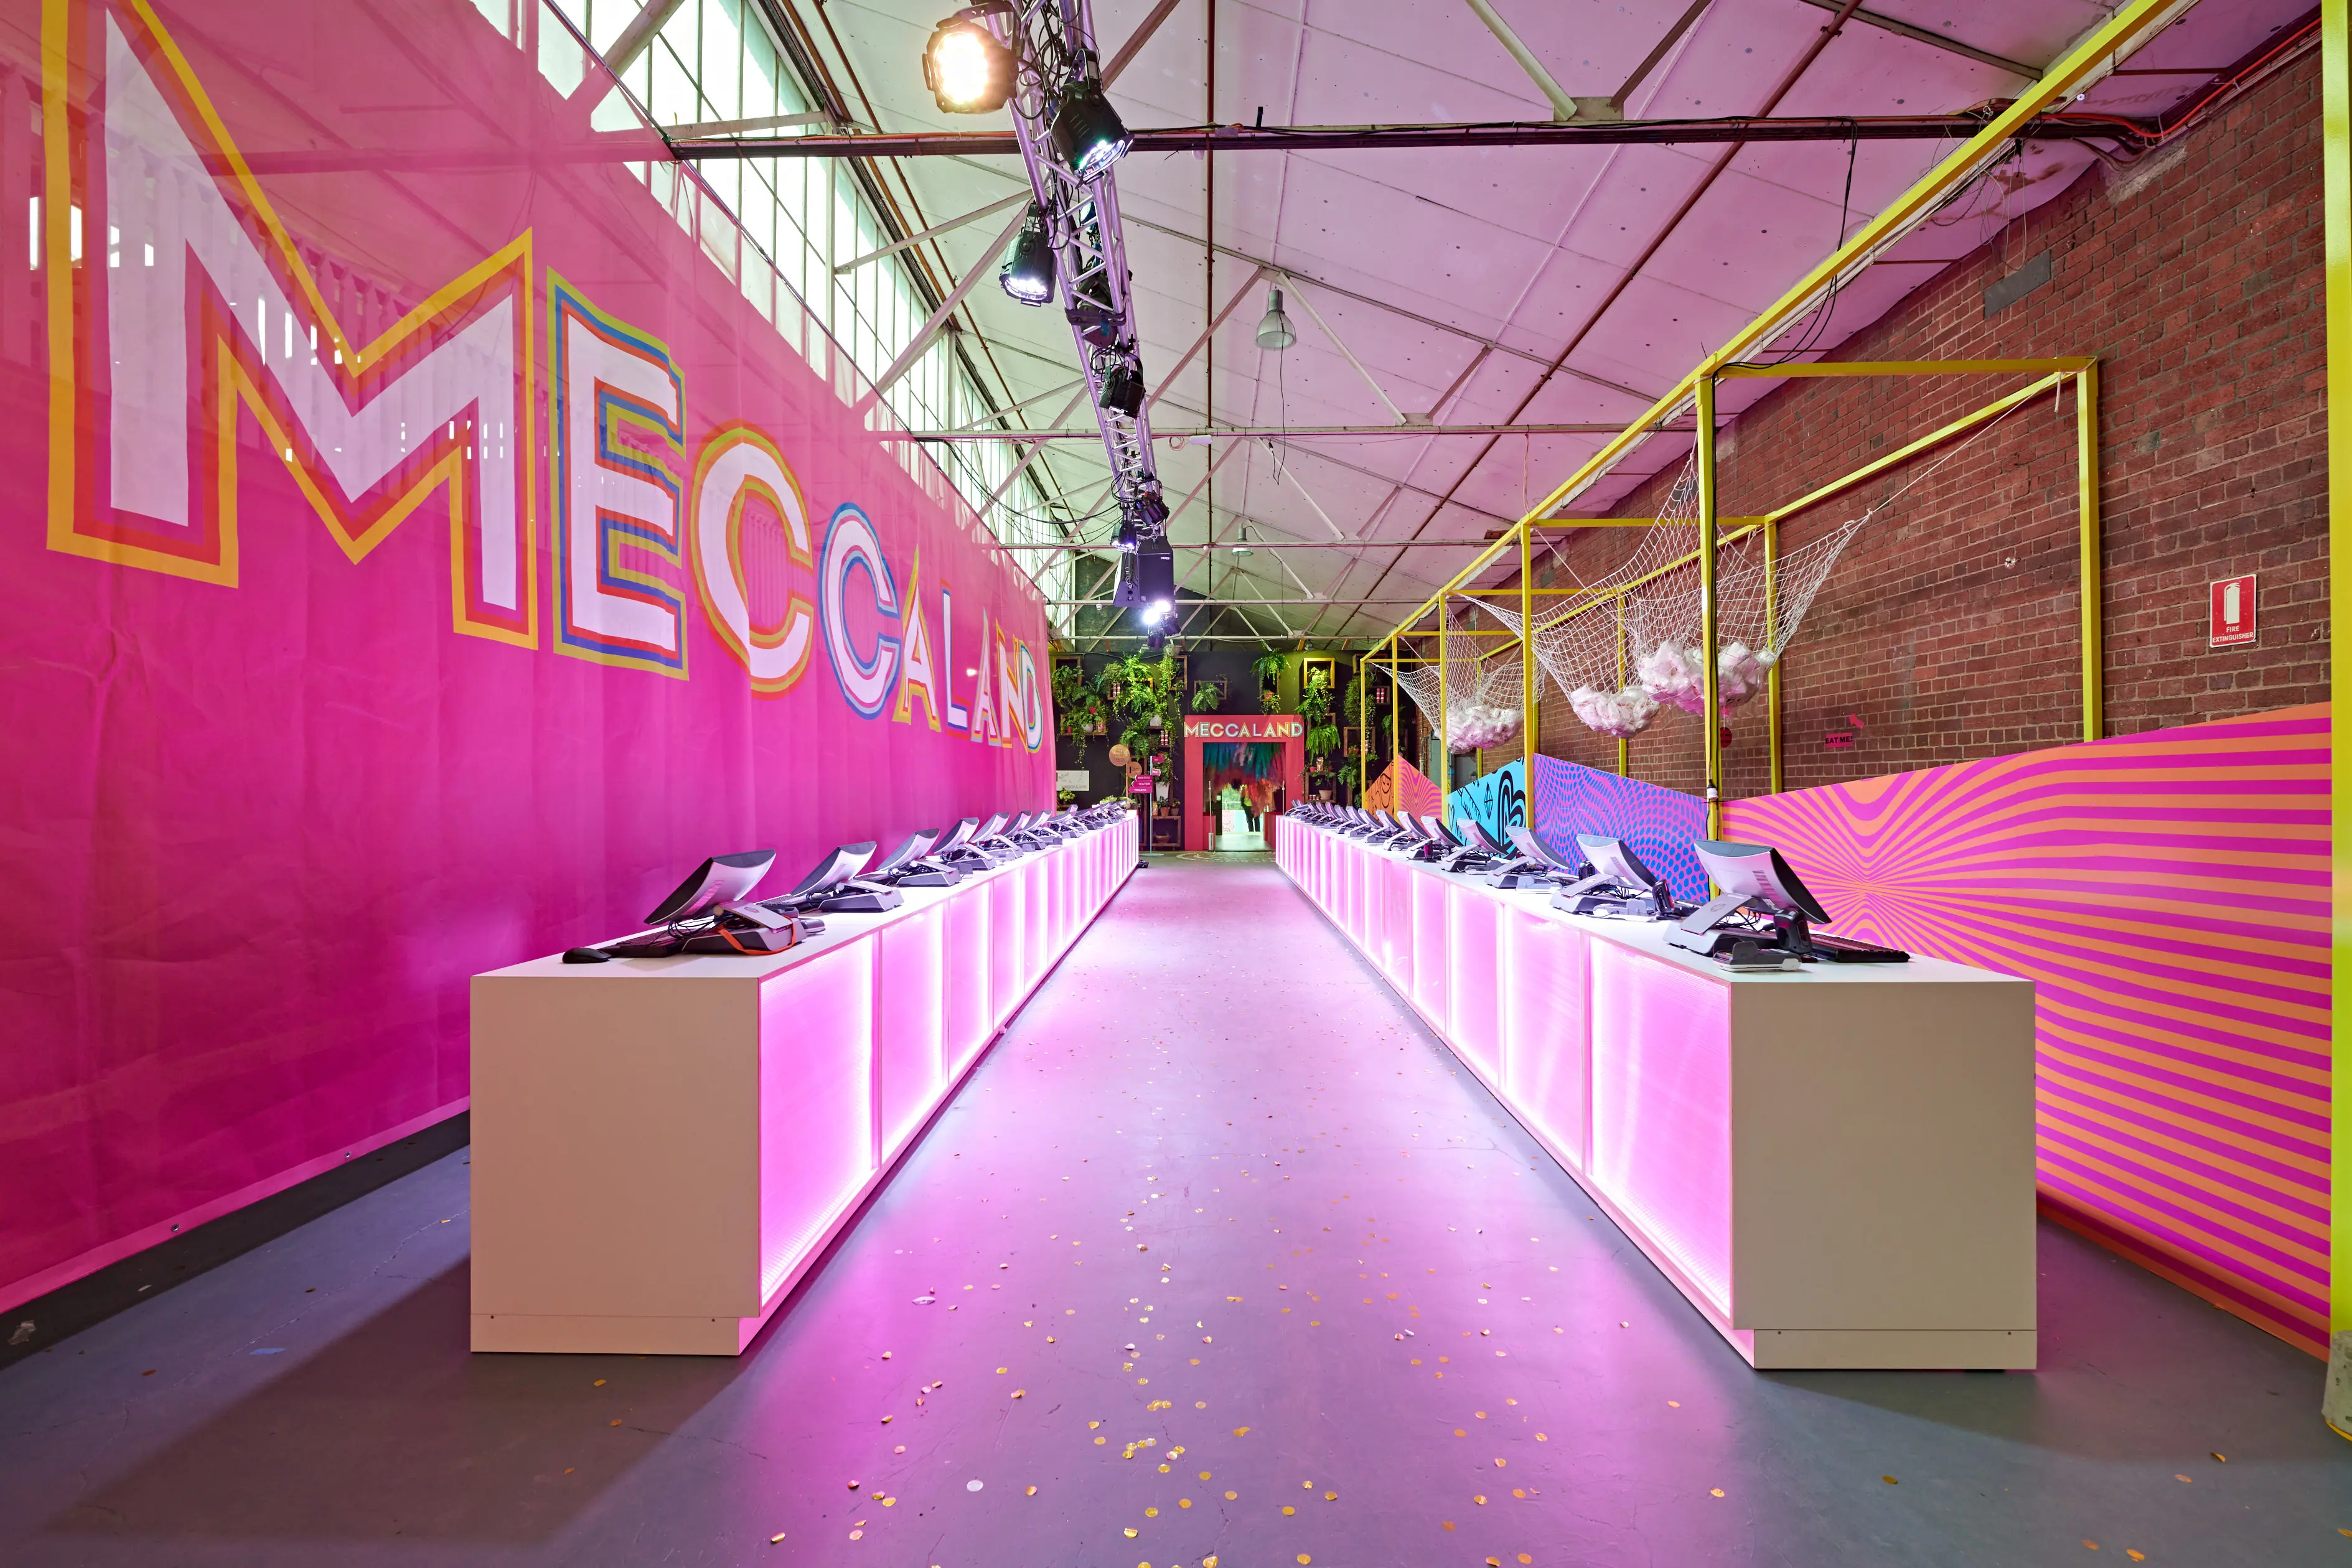 Meccaland Brand Booths - retail brand activation, retail design, event management and production - Melbourne, Australia